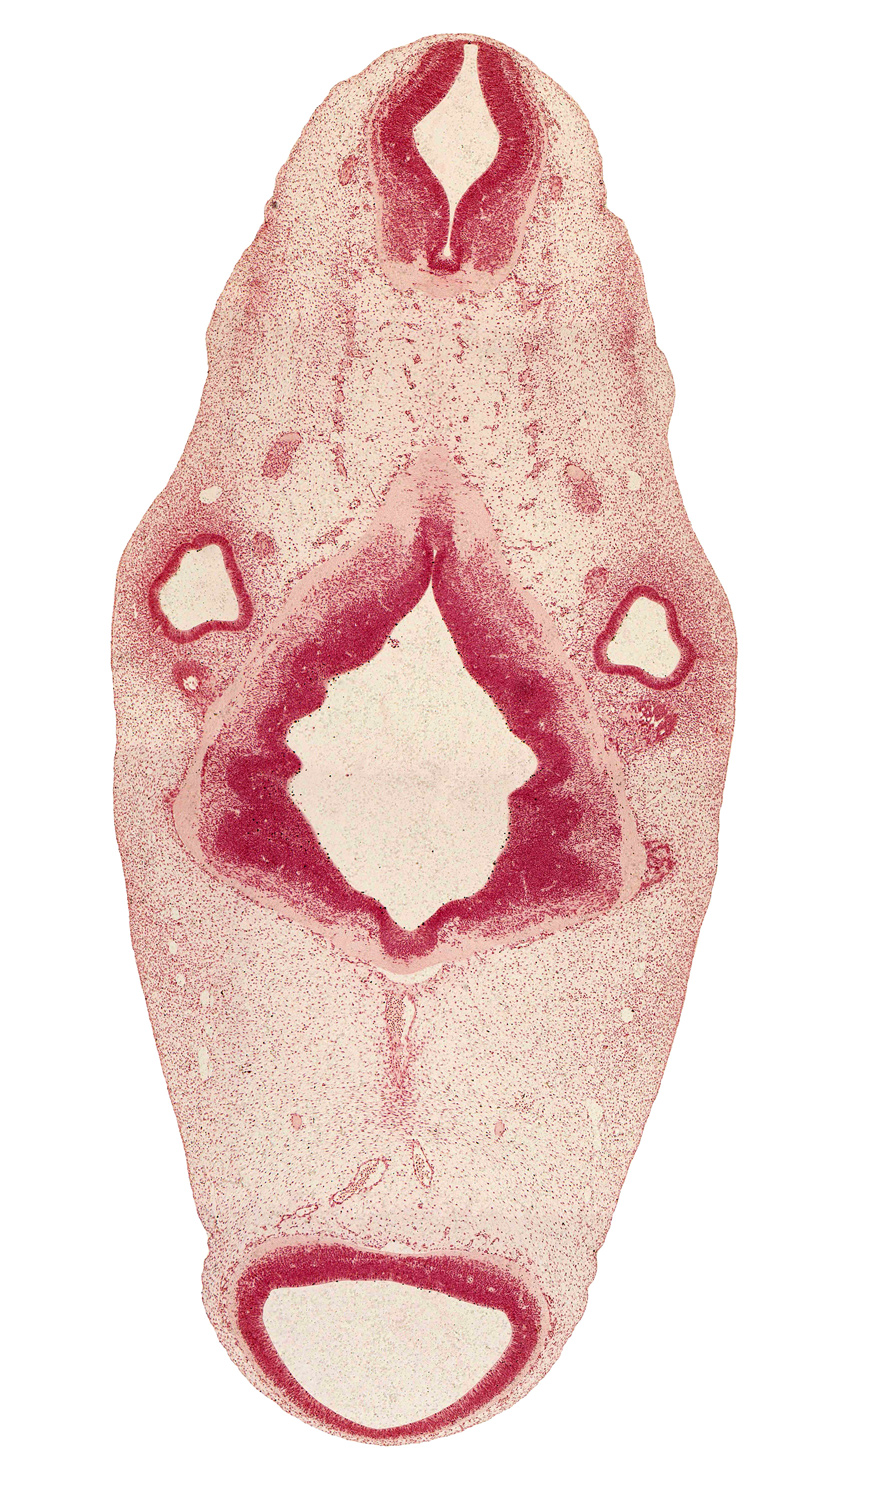 intermediate zone, marginal zone, median sulcus, mesencephalon (M1), mesencoel (cerebral aqueduct), myelencephalon, occipital myotome, oculomotor nerve (CN III), otic capsule, posterior dural venous plexus, rhombomere 1, rhombomere 2, rhombomere 3, rhombomere 4, rhombomere 5, superior ganglion of glossopharyngeal nerve (CN IX), trochlear nerve (CN IV), vascular plexus, ventricular zone, vestibular part of otic vesicle